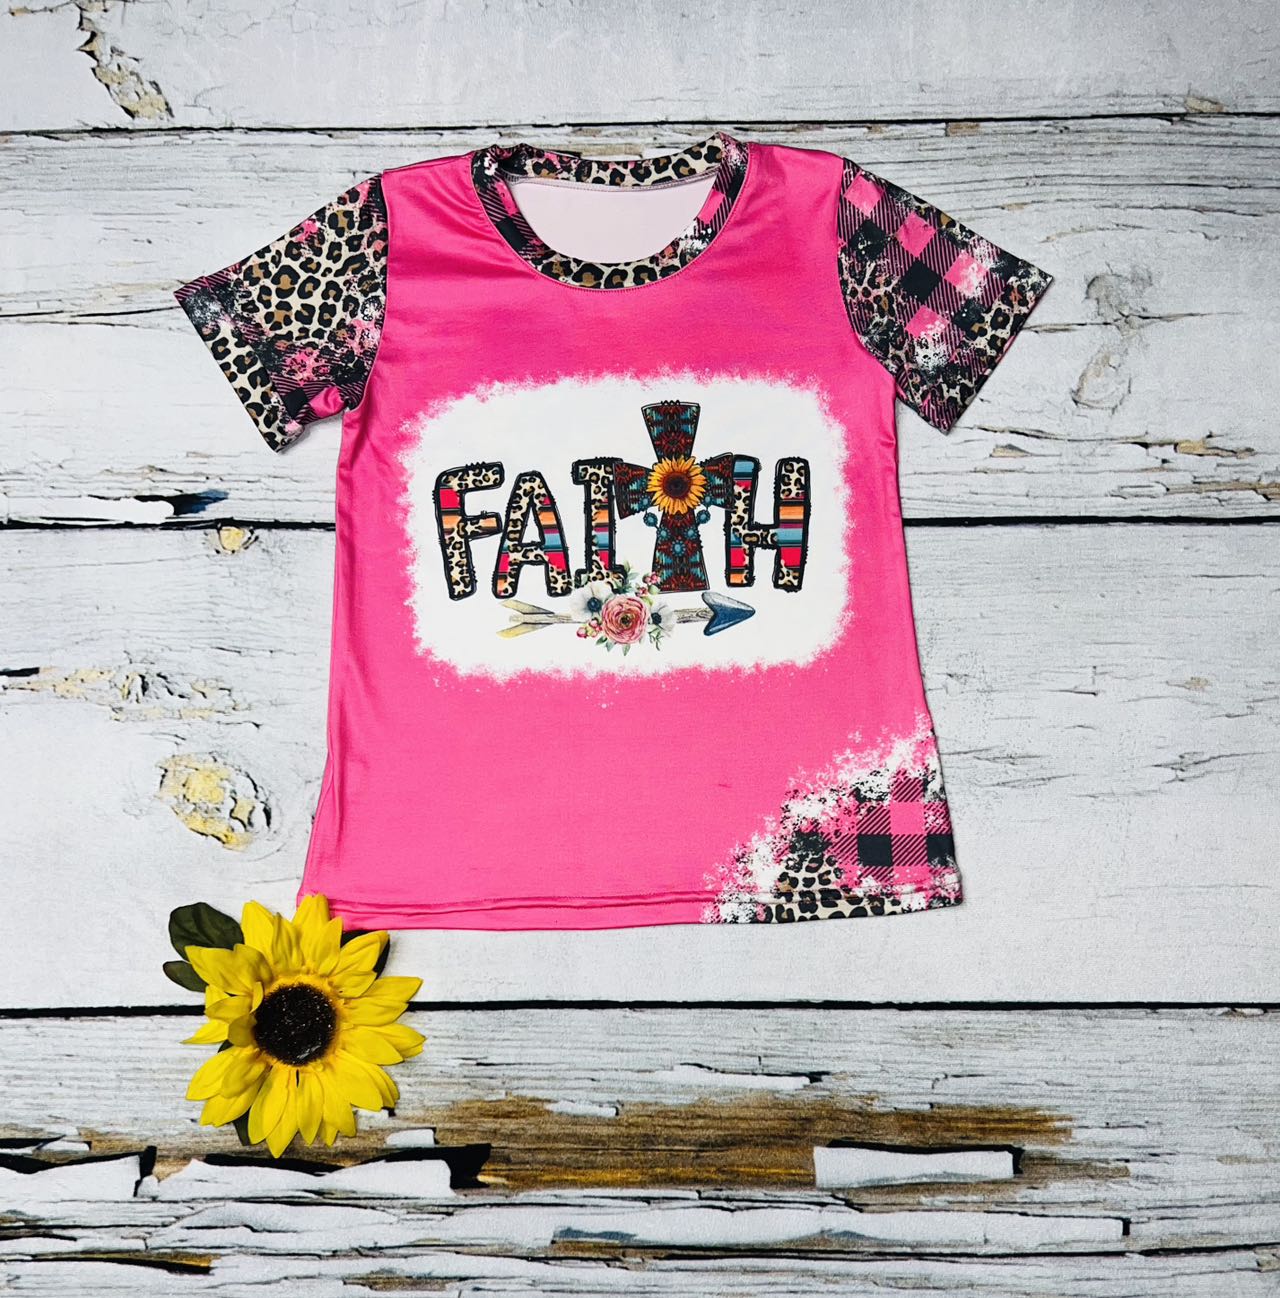 Hot Pink "FAITH" leopard & checkers short sleeve t-shirt DLH1215-37